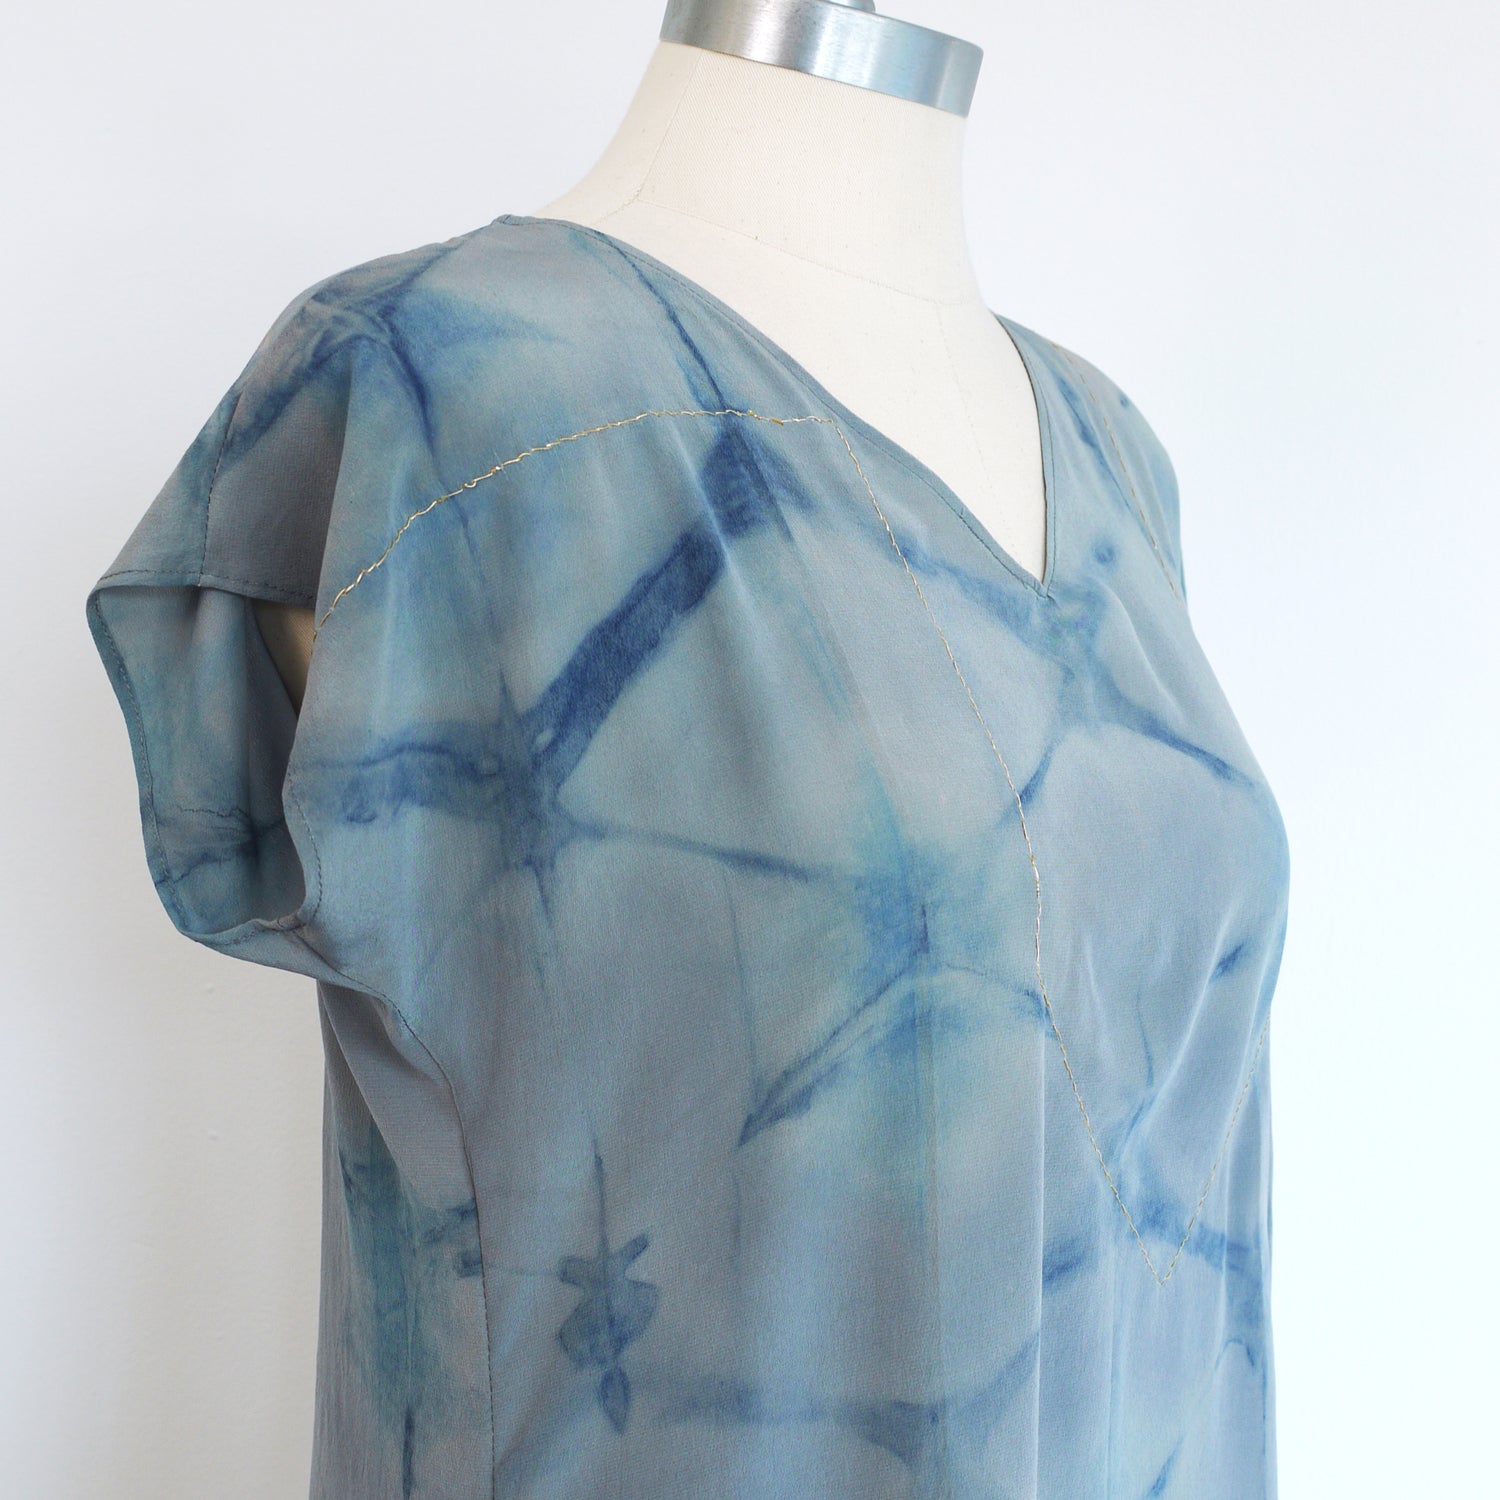 BLUE on Gray indigo embroidered silk dress.